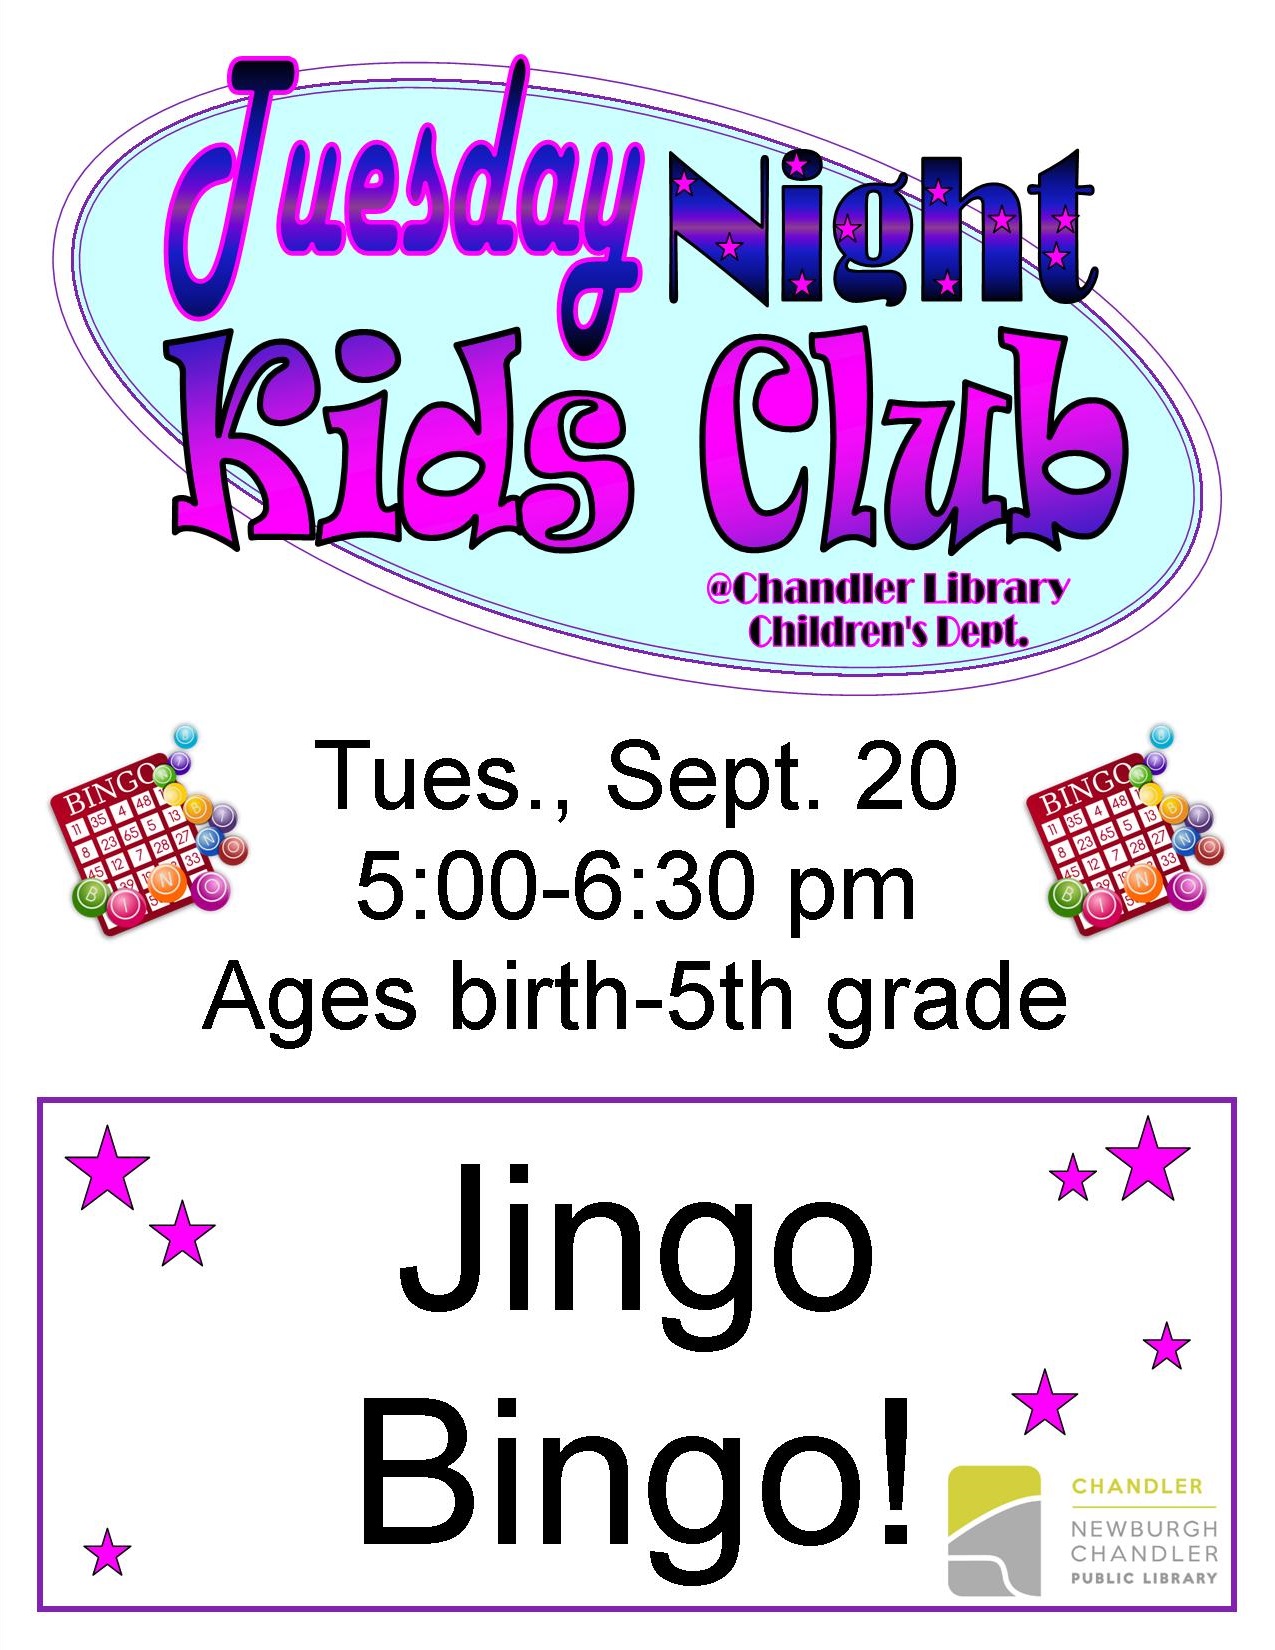 Tuesday Night Kids Club: Jingo Bingo @ Chandler Library Children's Department | Chandler | Indiana | United States